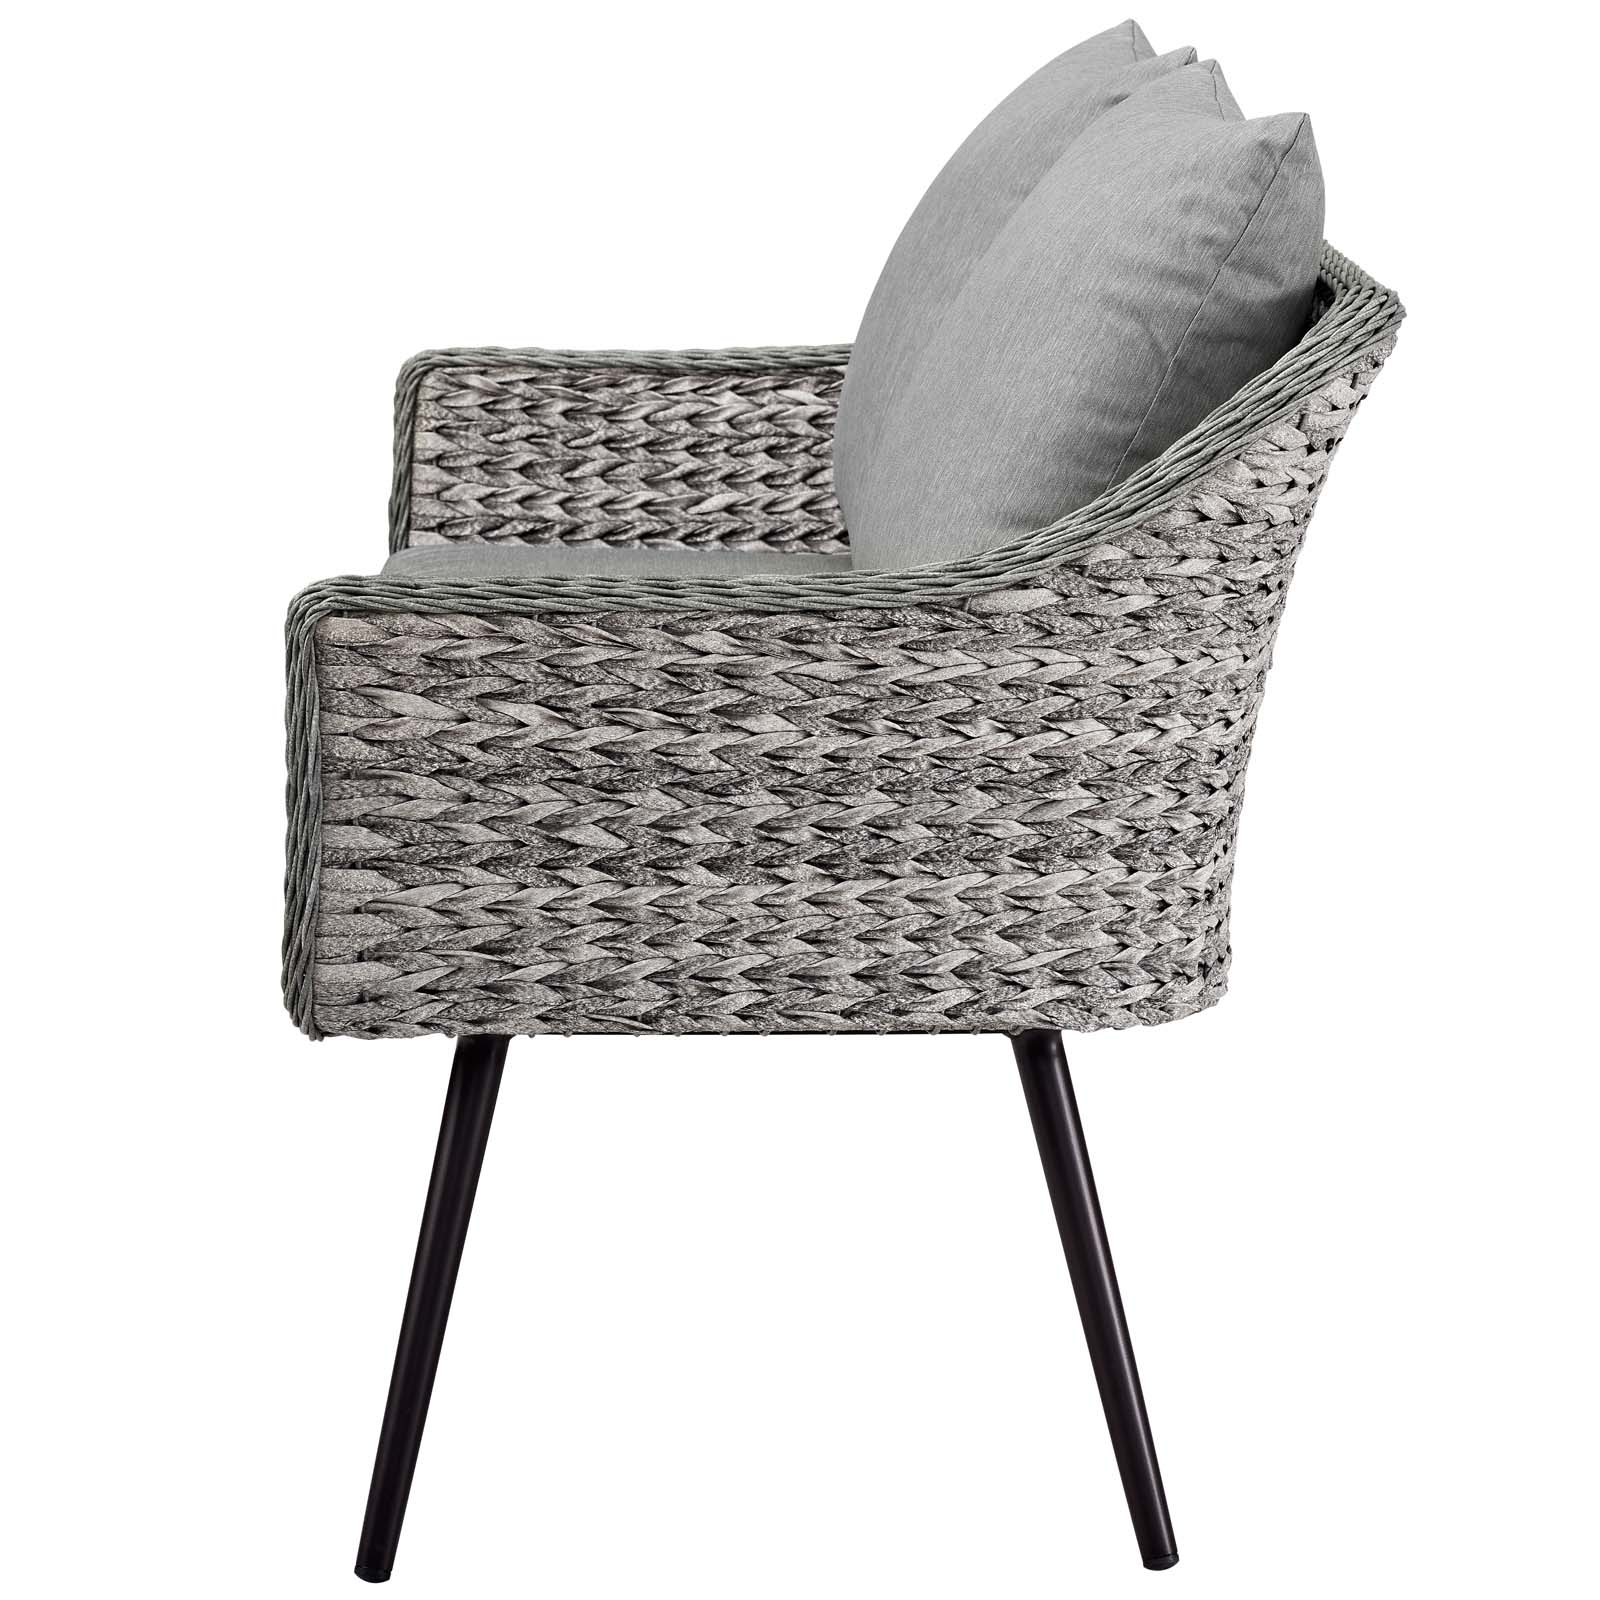 Contemporary Modern Urban Designer Outdoor Patio Balcony Garden Furniture Lounge Sofa and Chair Set, Aluminum Fabric Wicker Rattan, Grey Gray - image 5 of 8